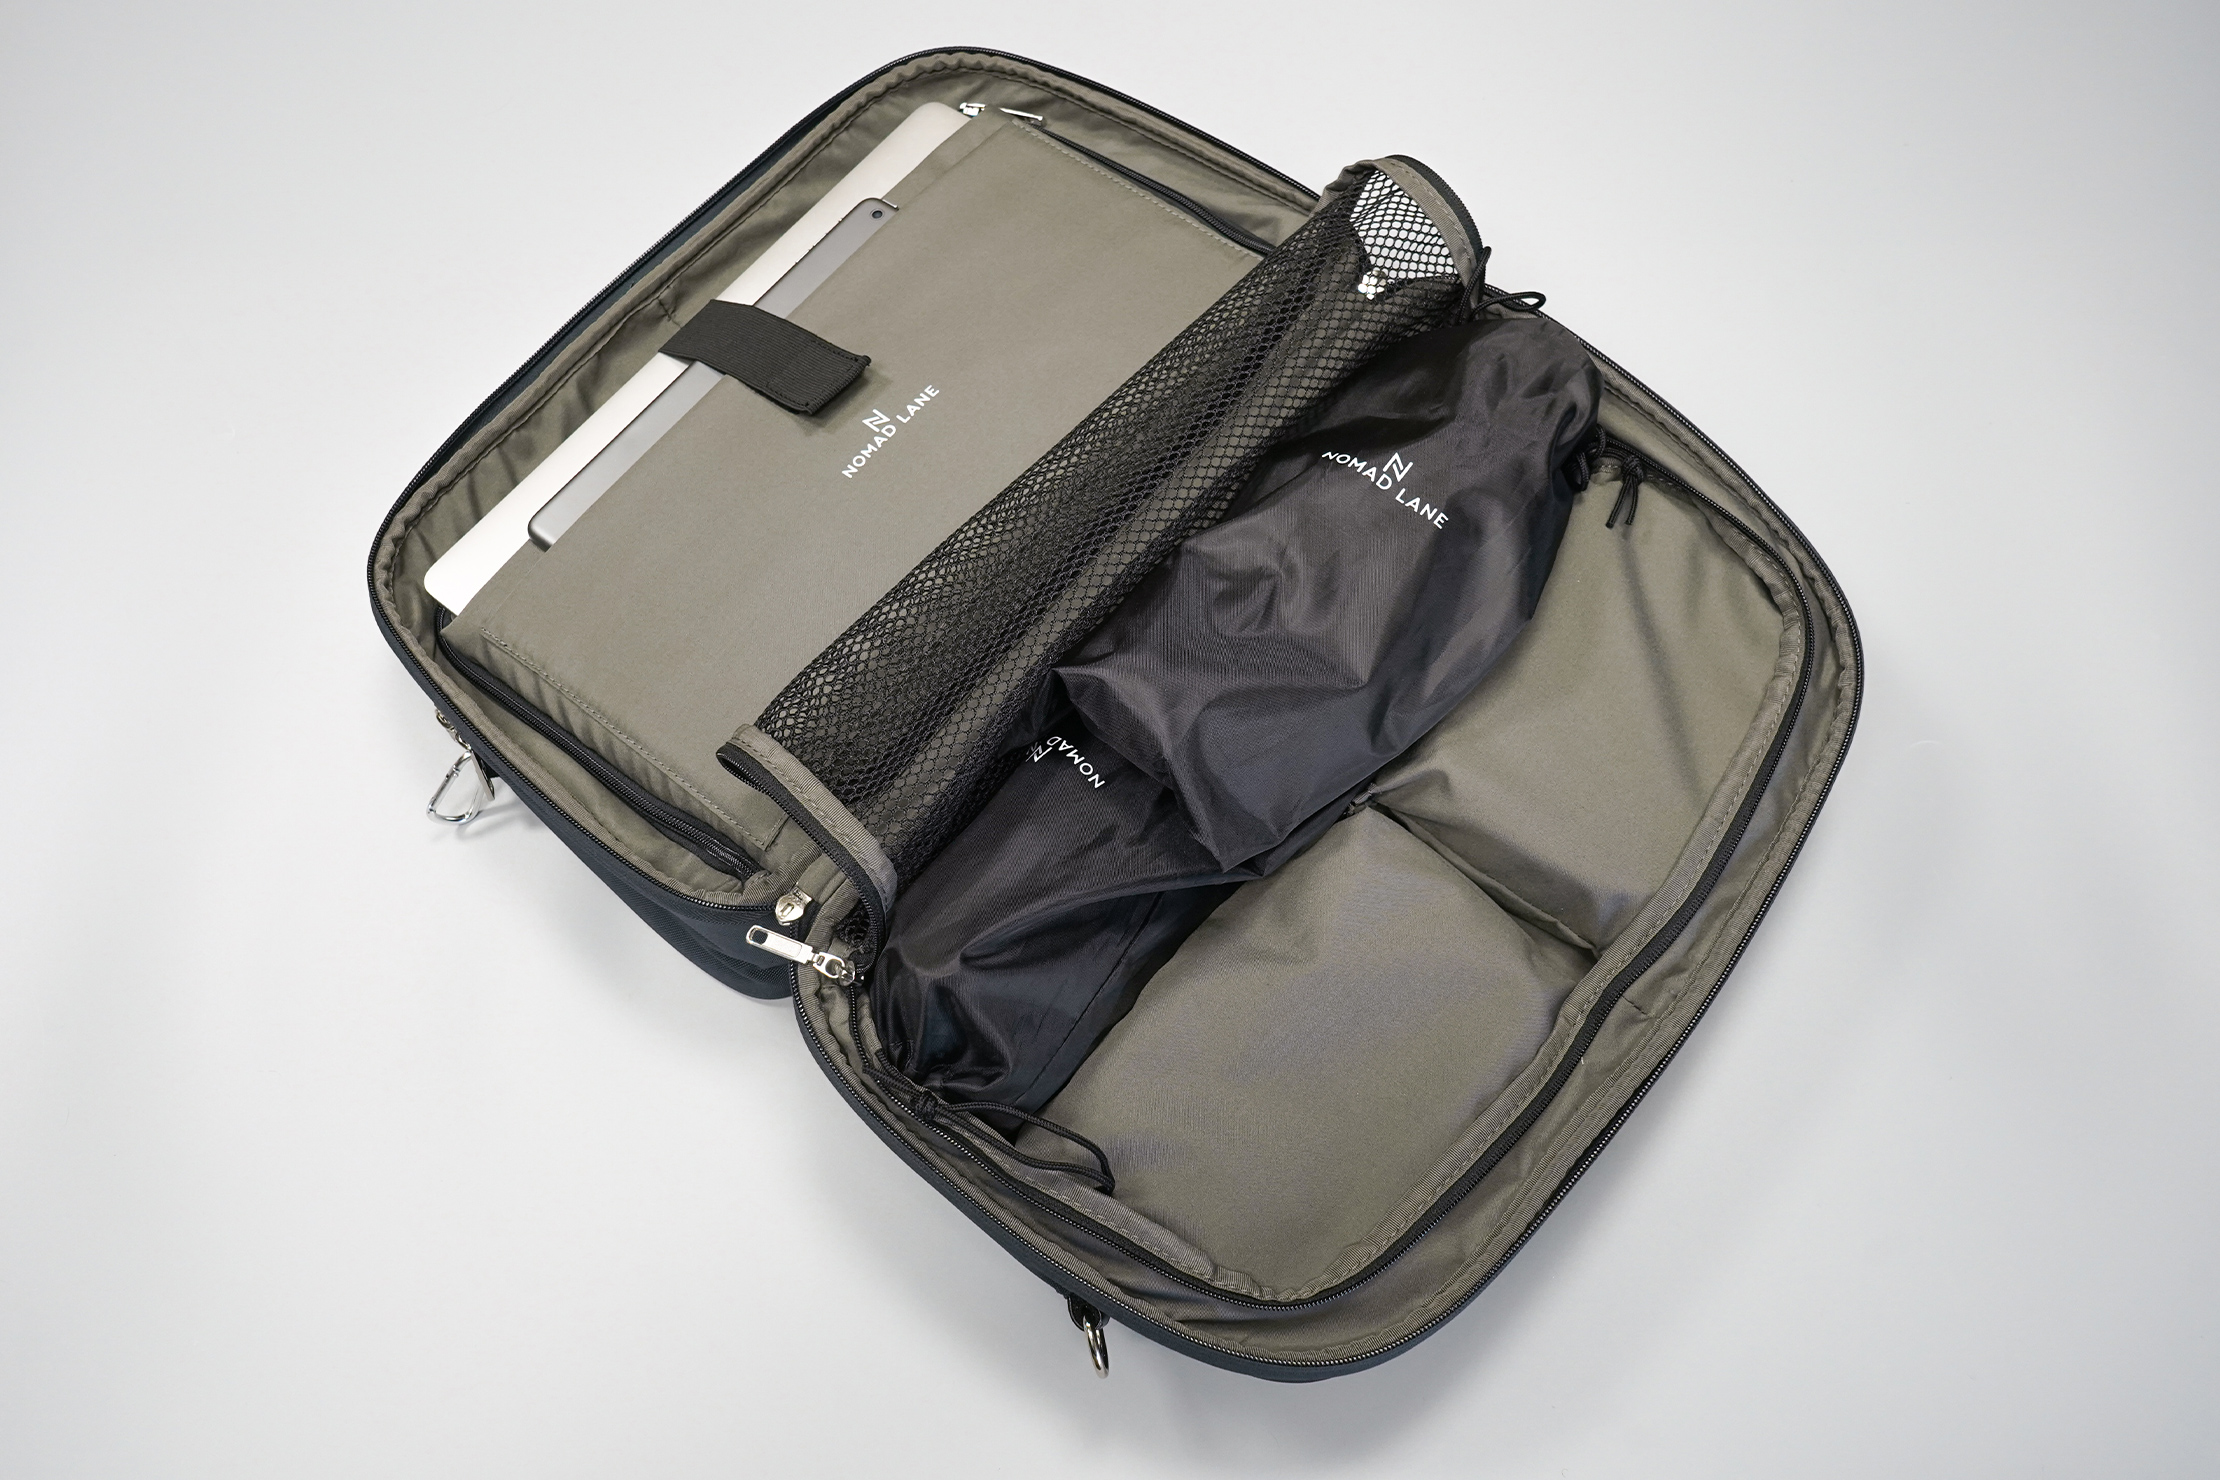 Nomad Lane Bento Bag Sport Edition main compartment